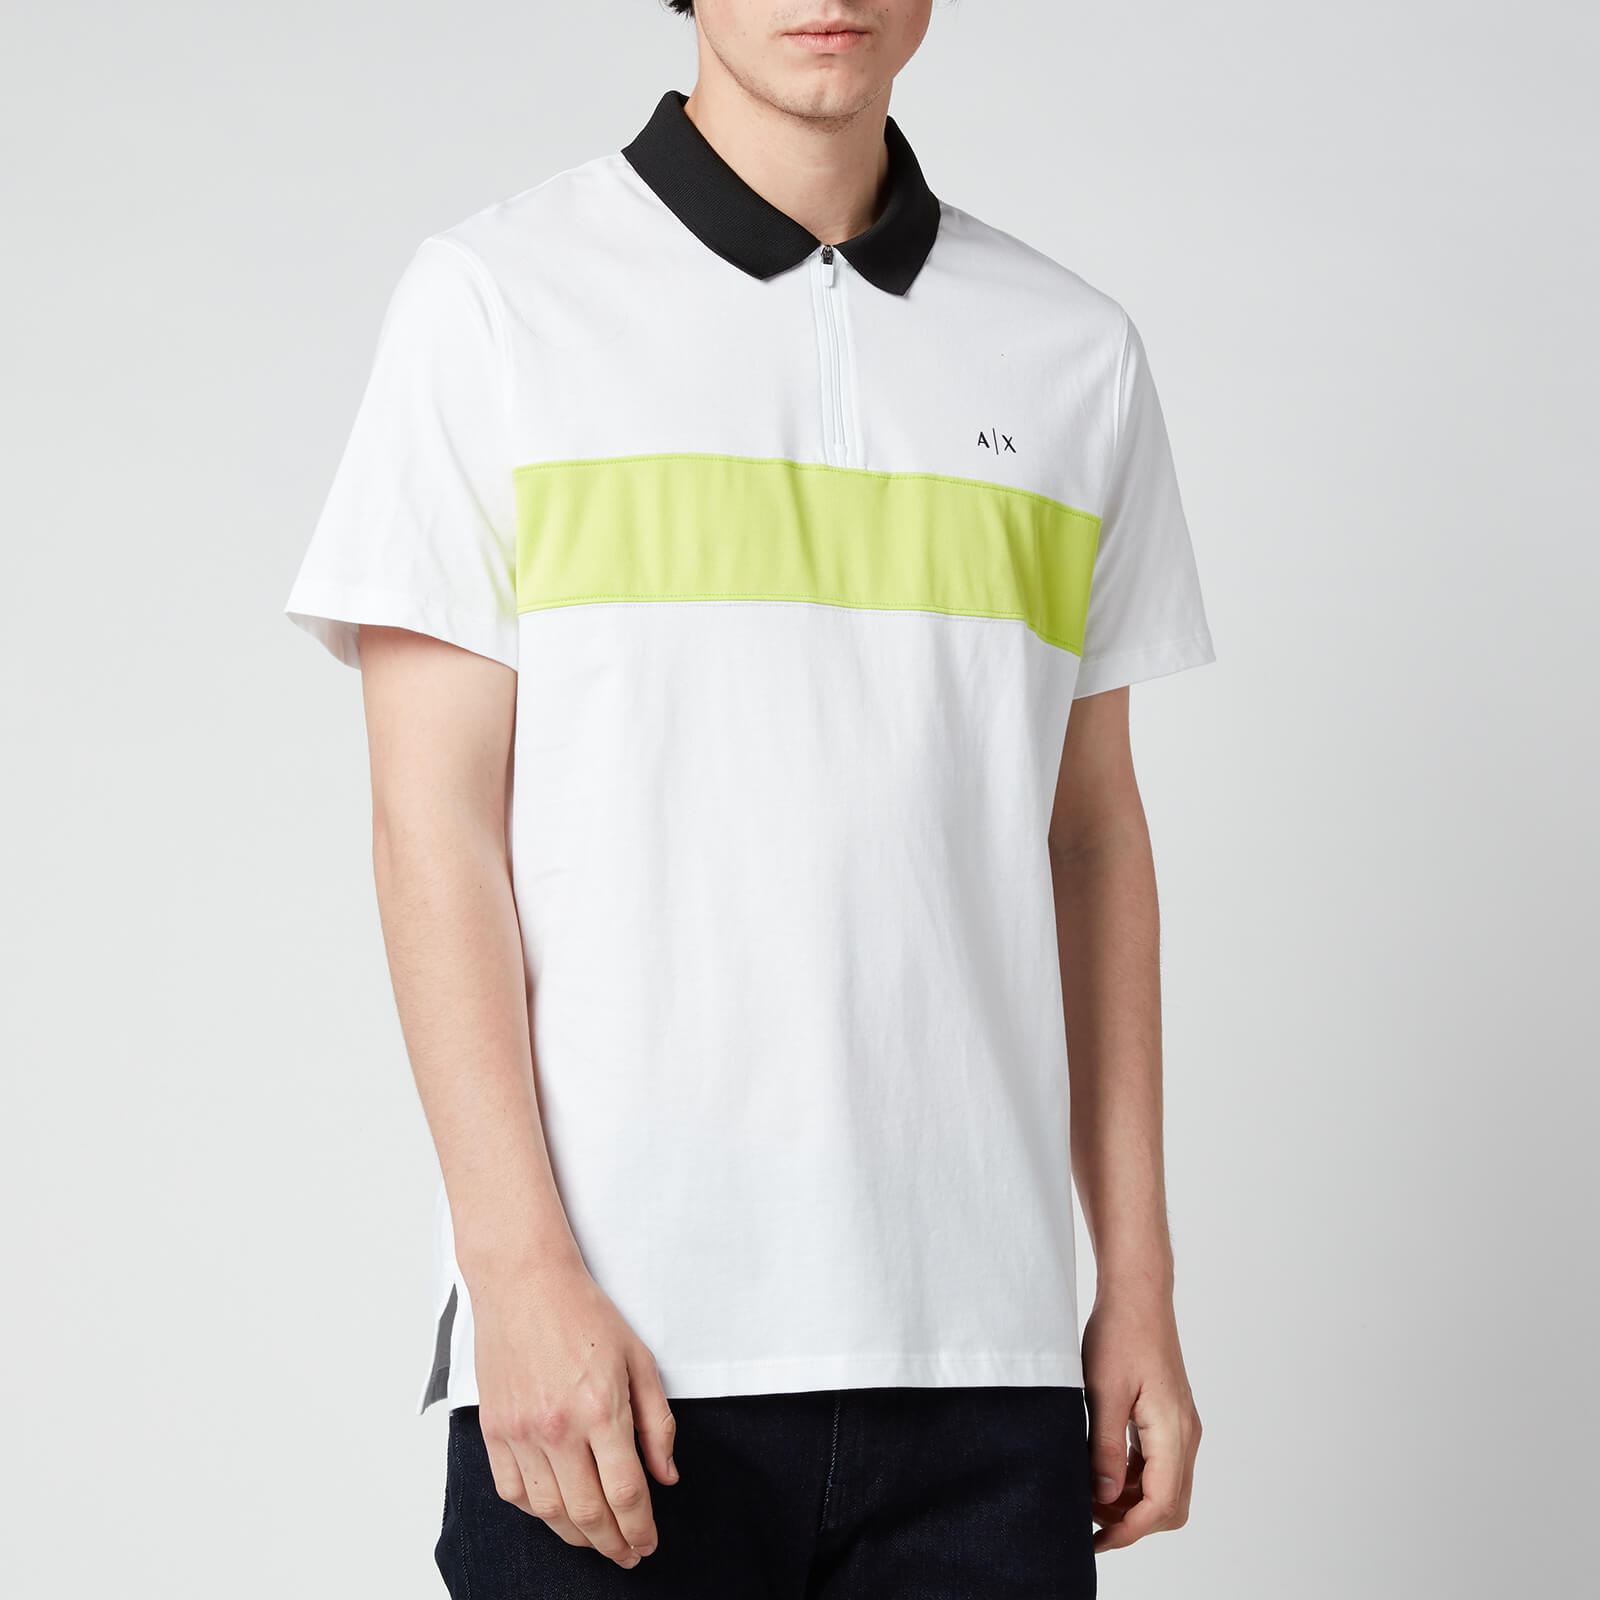 Armani Exchange Men's Neon Stripe Polo Shirt - White/Acid Lime - S